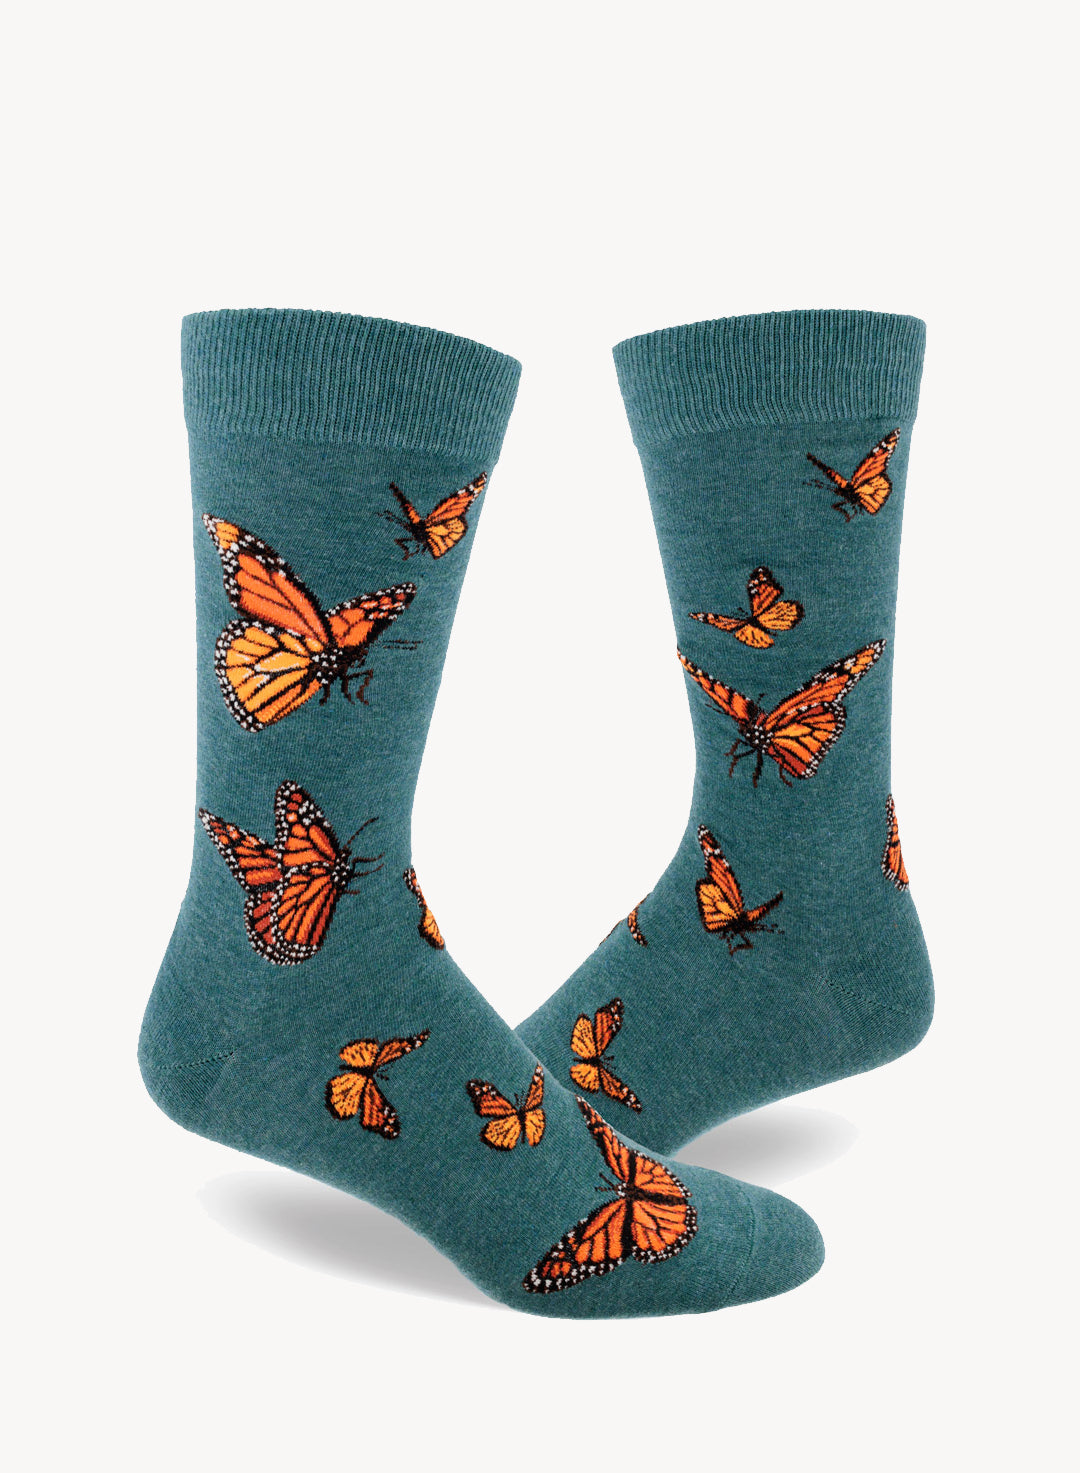 Socks-Monarch-sea.jpg